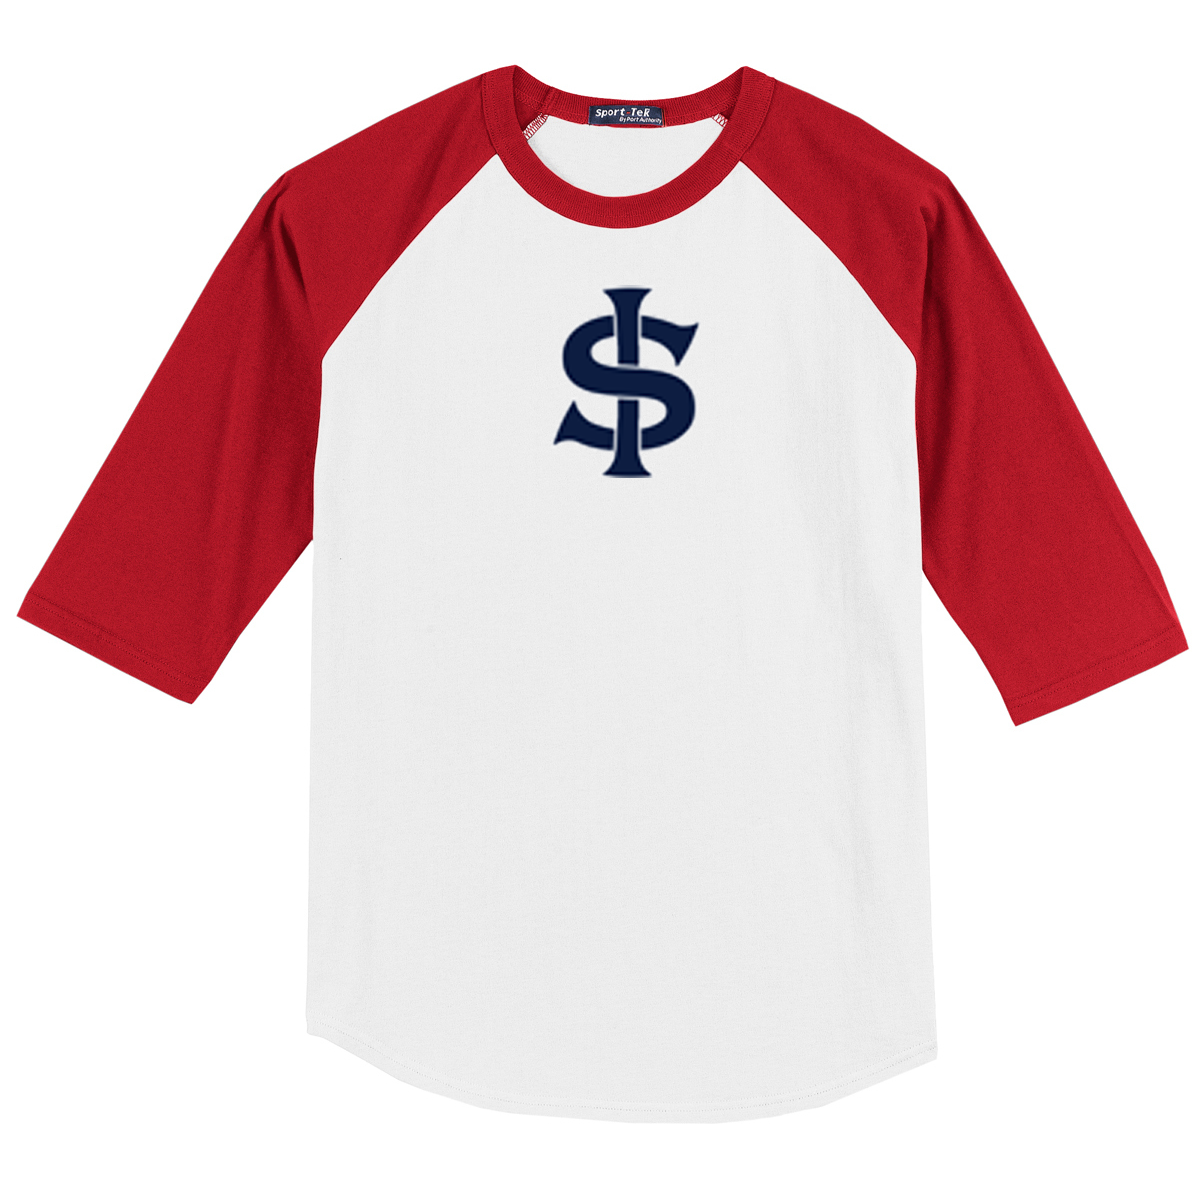 Iowa Sandlot Baseball  3/4 Sleeve Baseball Shirt